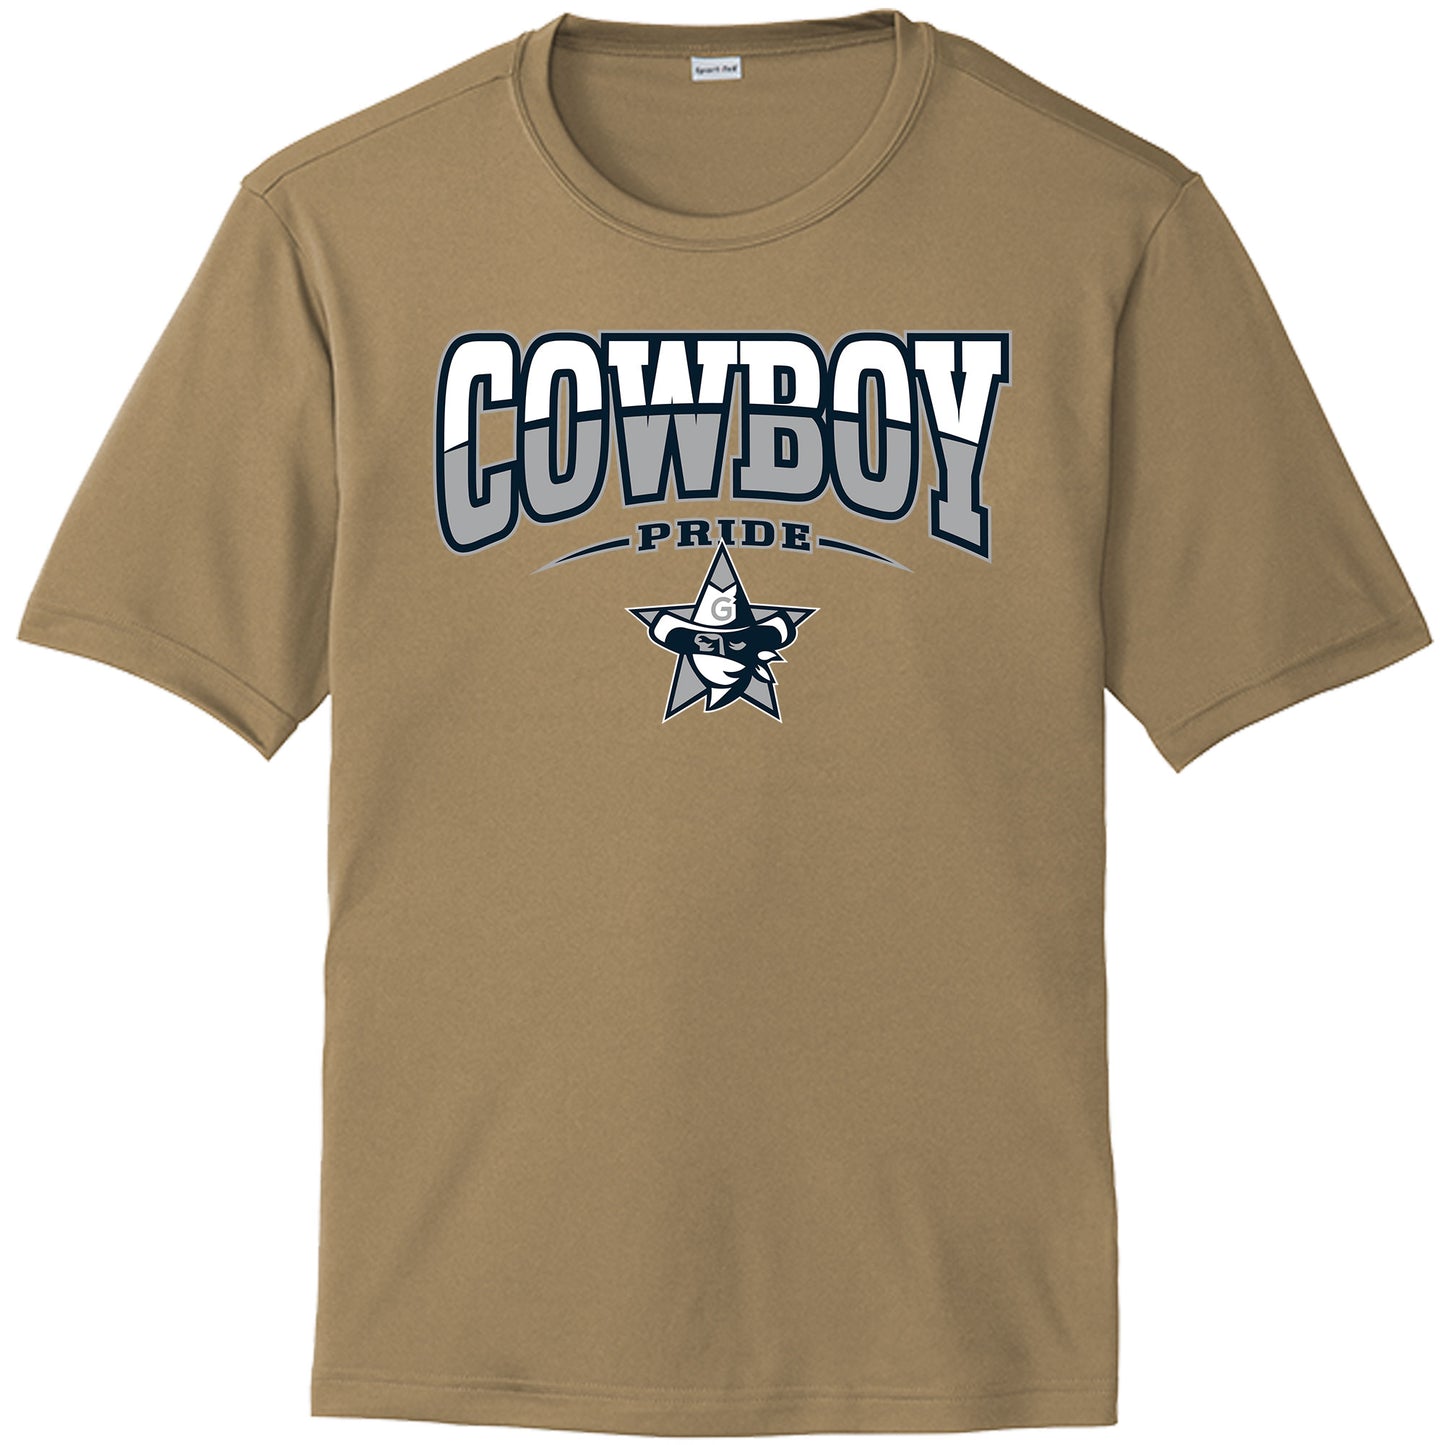 Gaither High School Drifit Shirt with Printed Cowboys Logo